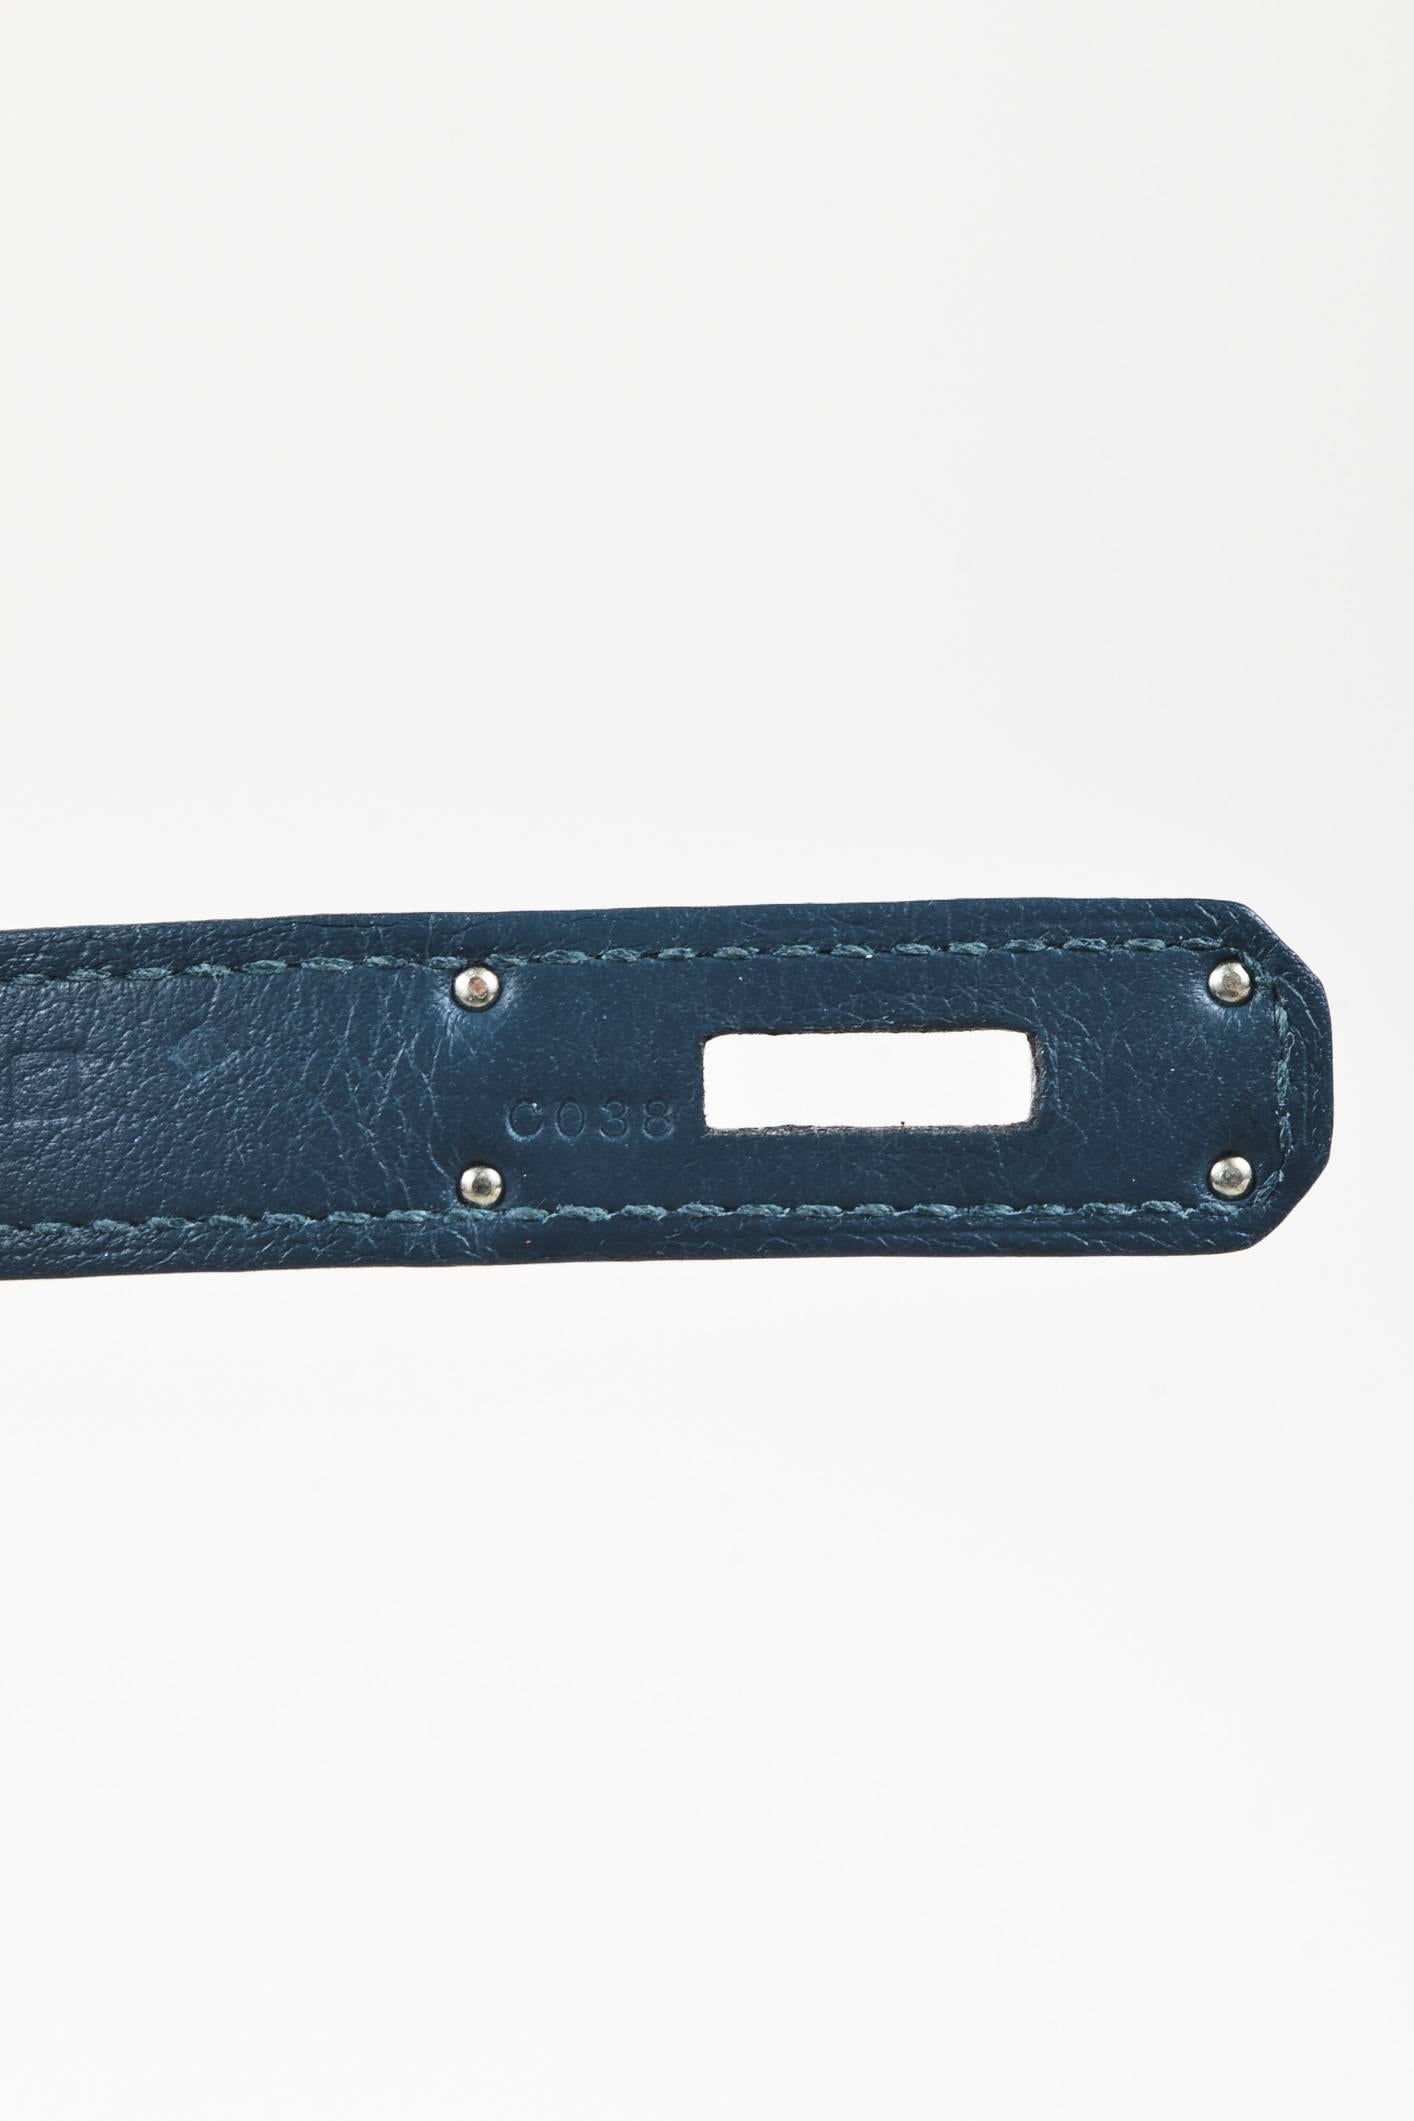 Hermes Bleu Thalassa Clemence Leather Birkin 35 cm Bag For Sale 4